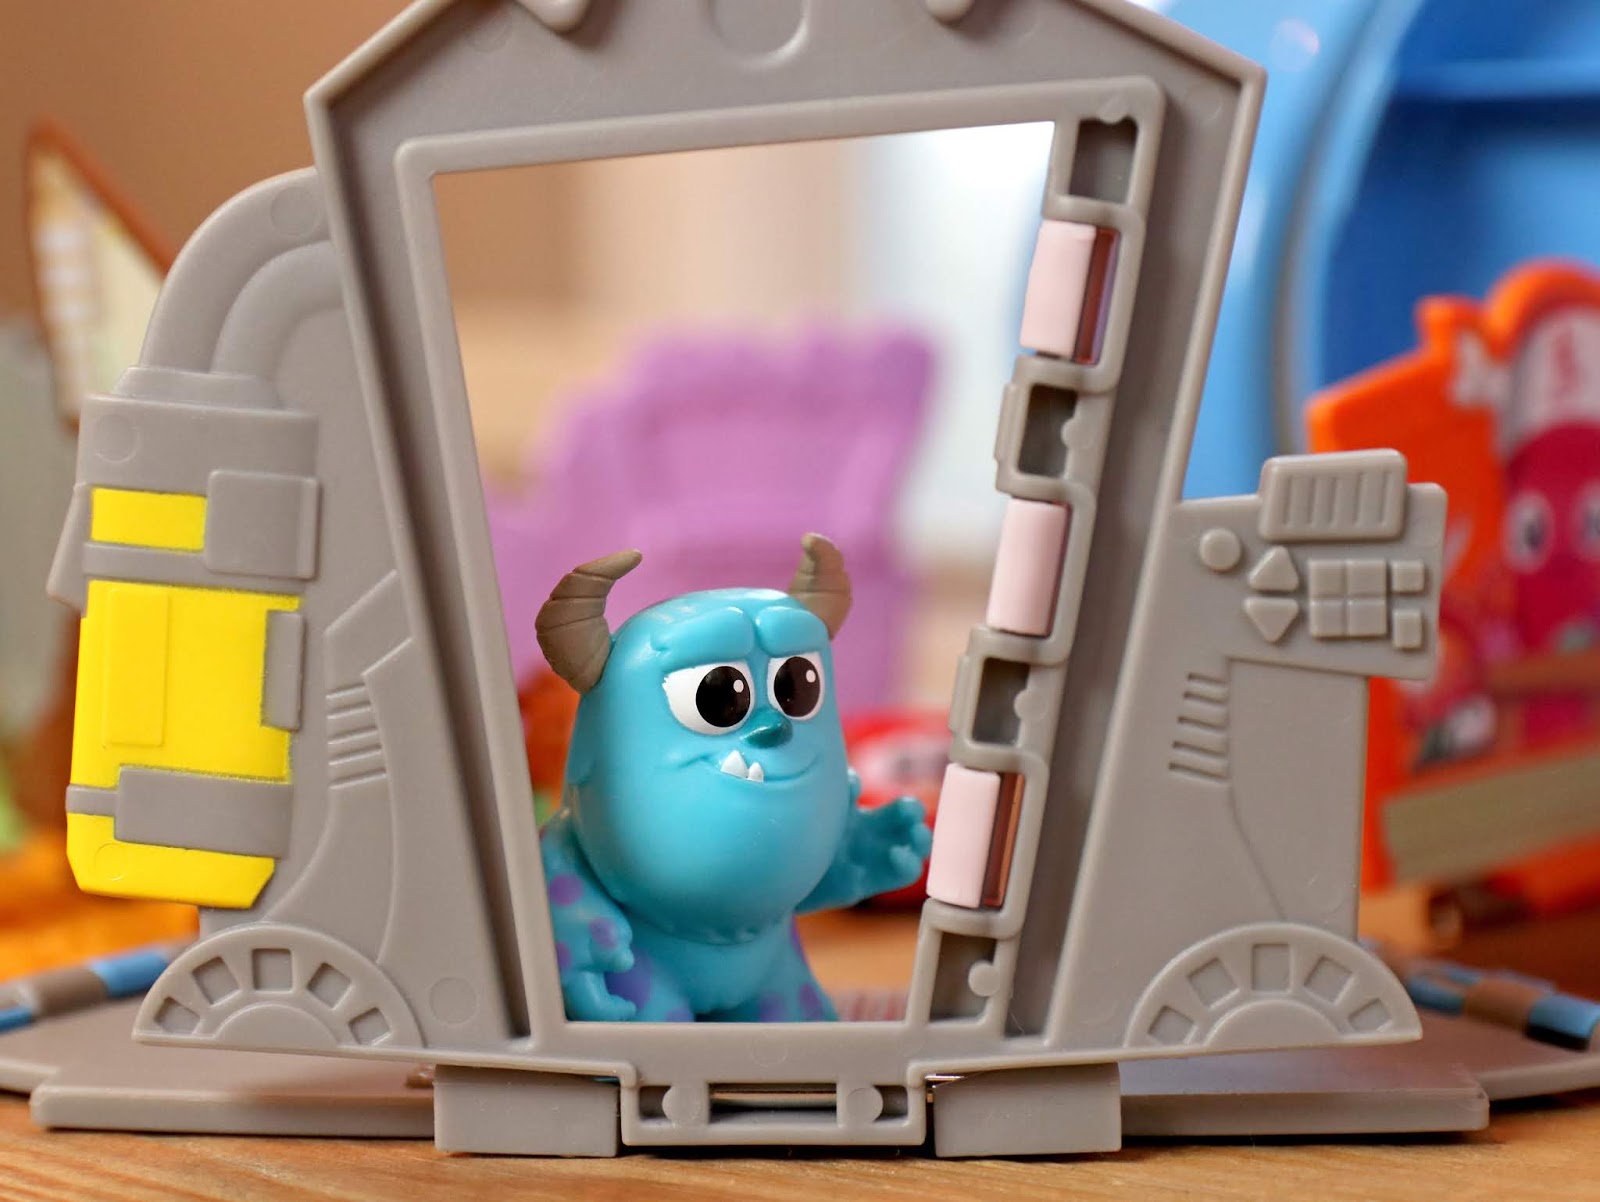 Mattel Pixar Minis "World of Pixar Playset" Review 